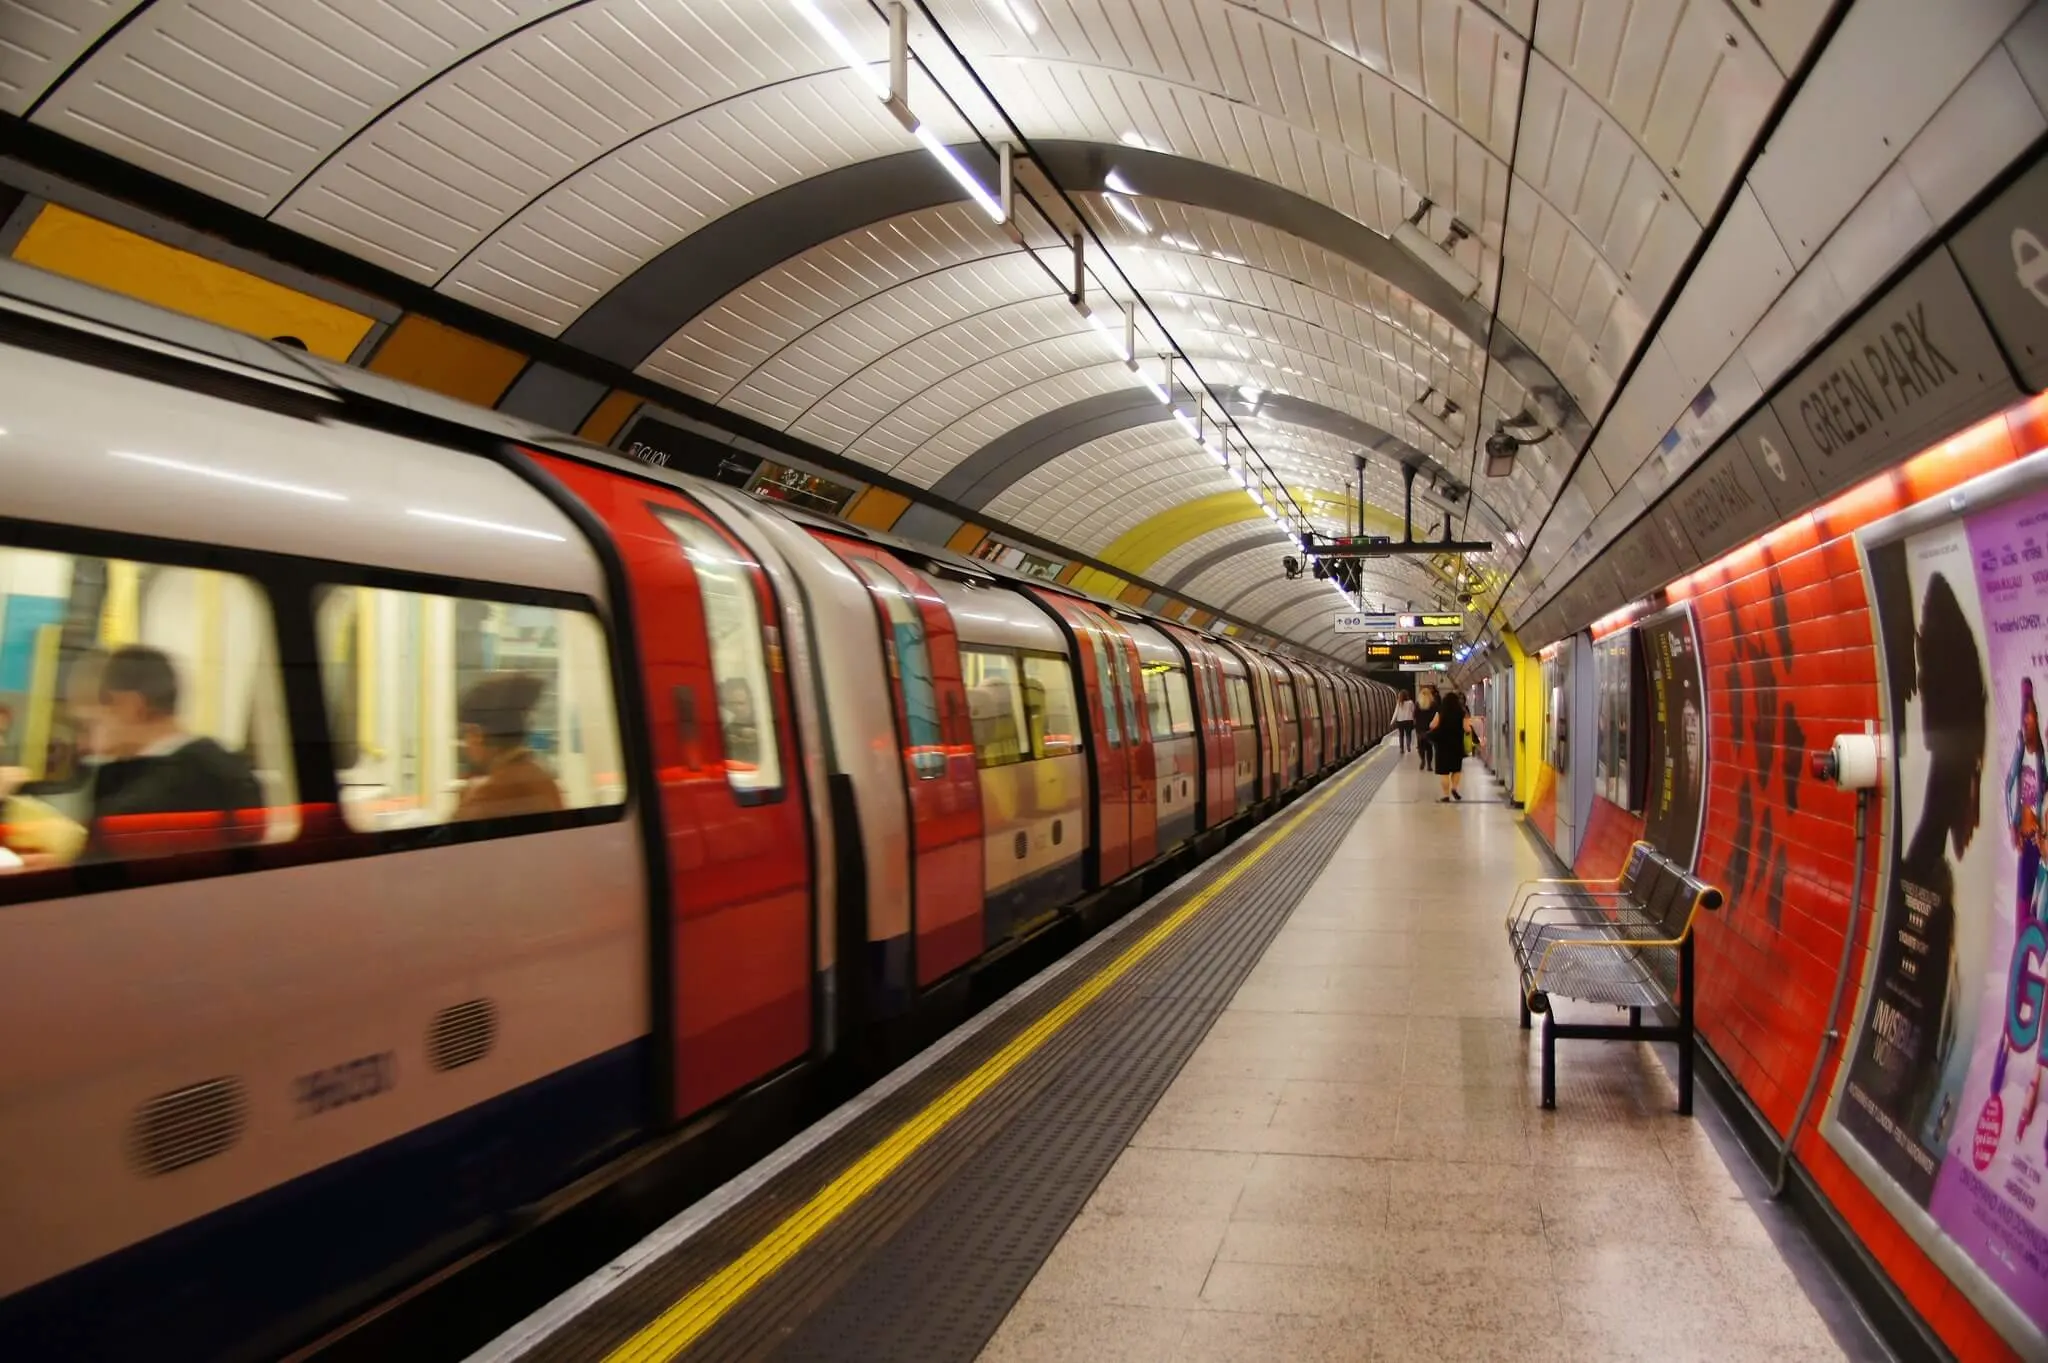 Exploring the London Underground